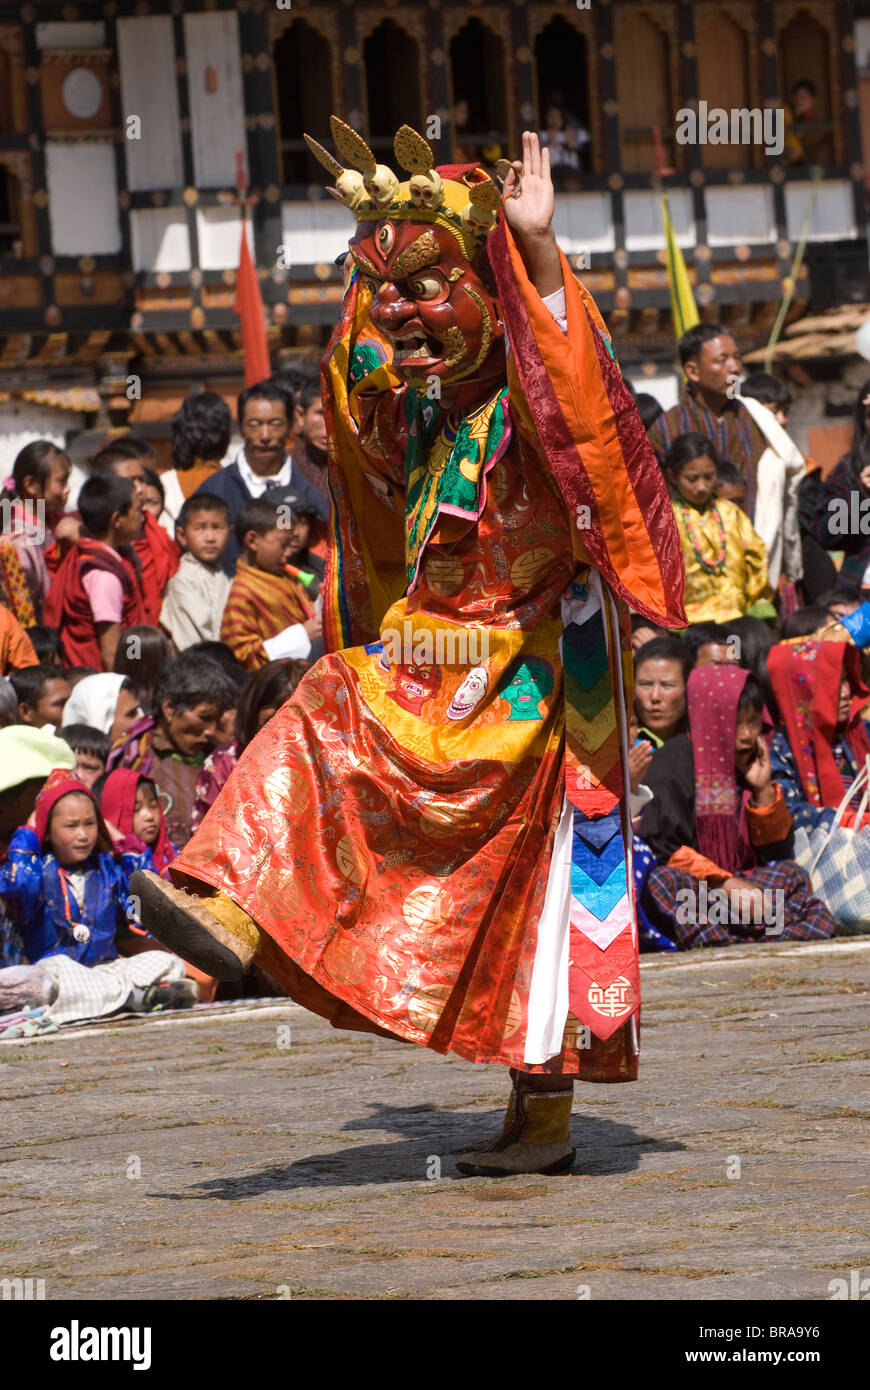 Masked dancer at religious festival with many visitors, Paro Tsechu, Paro, Bhutan, Asia Stock Photo